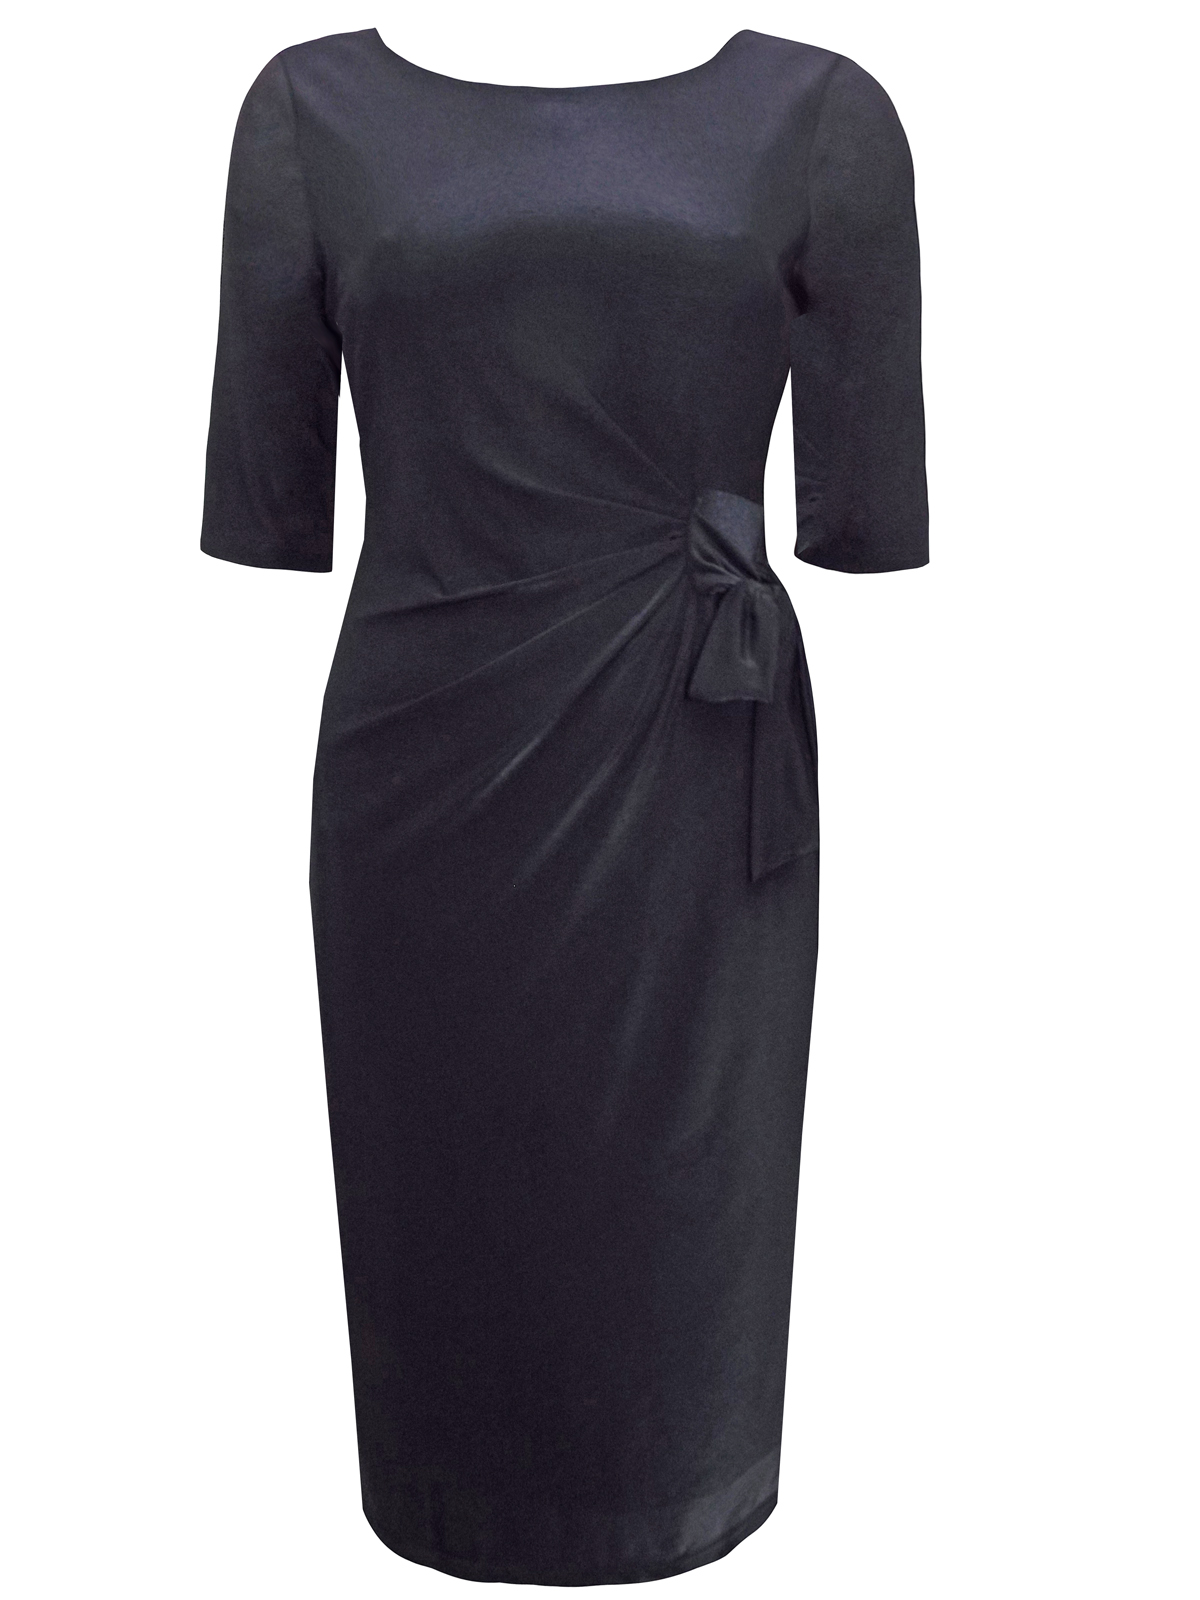 F&F - - BLACK Half Sleeve Tie Waist Shift Dress - Size 6 to 18